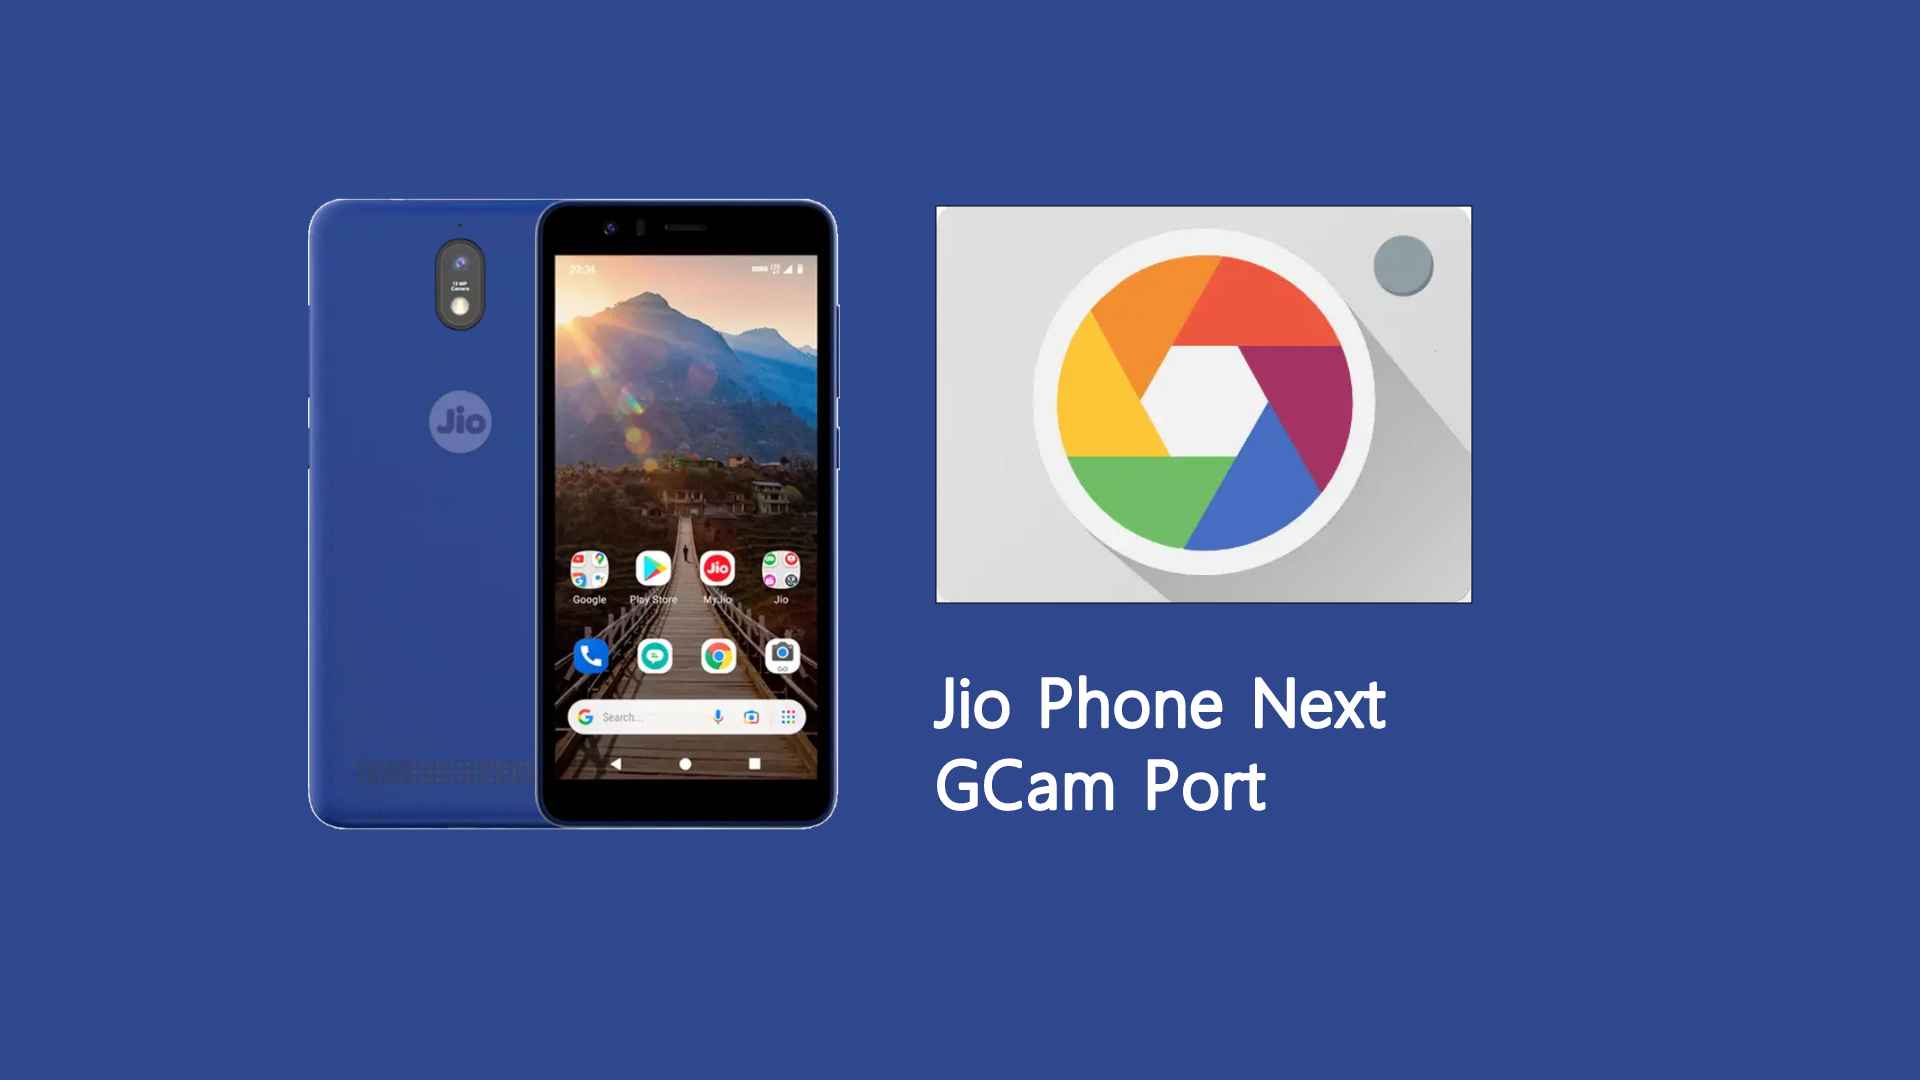 Jio Phone Next GCam Port